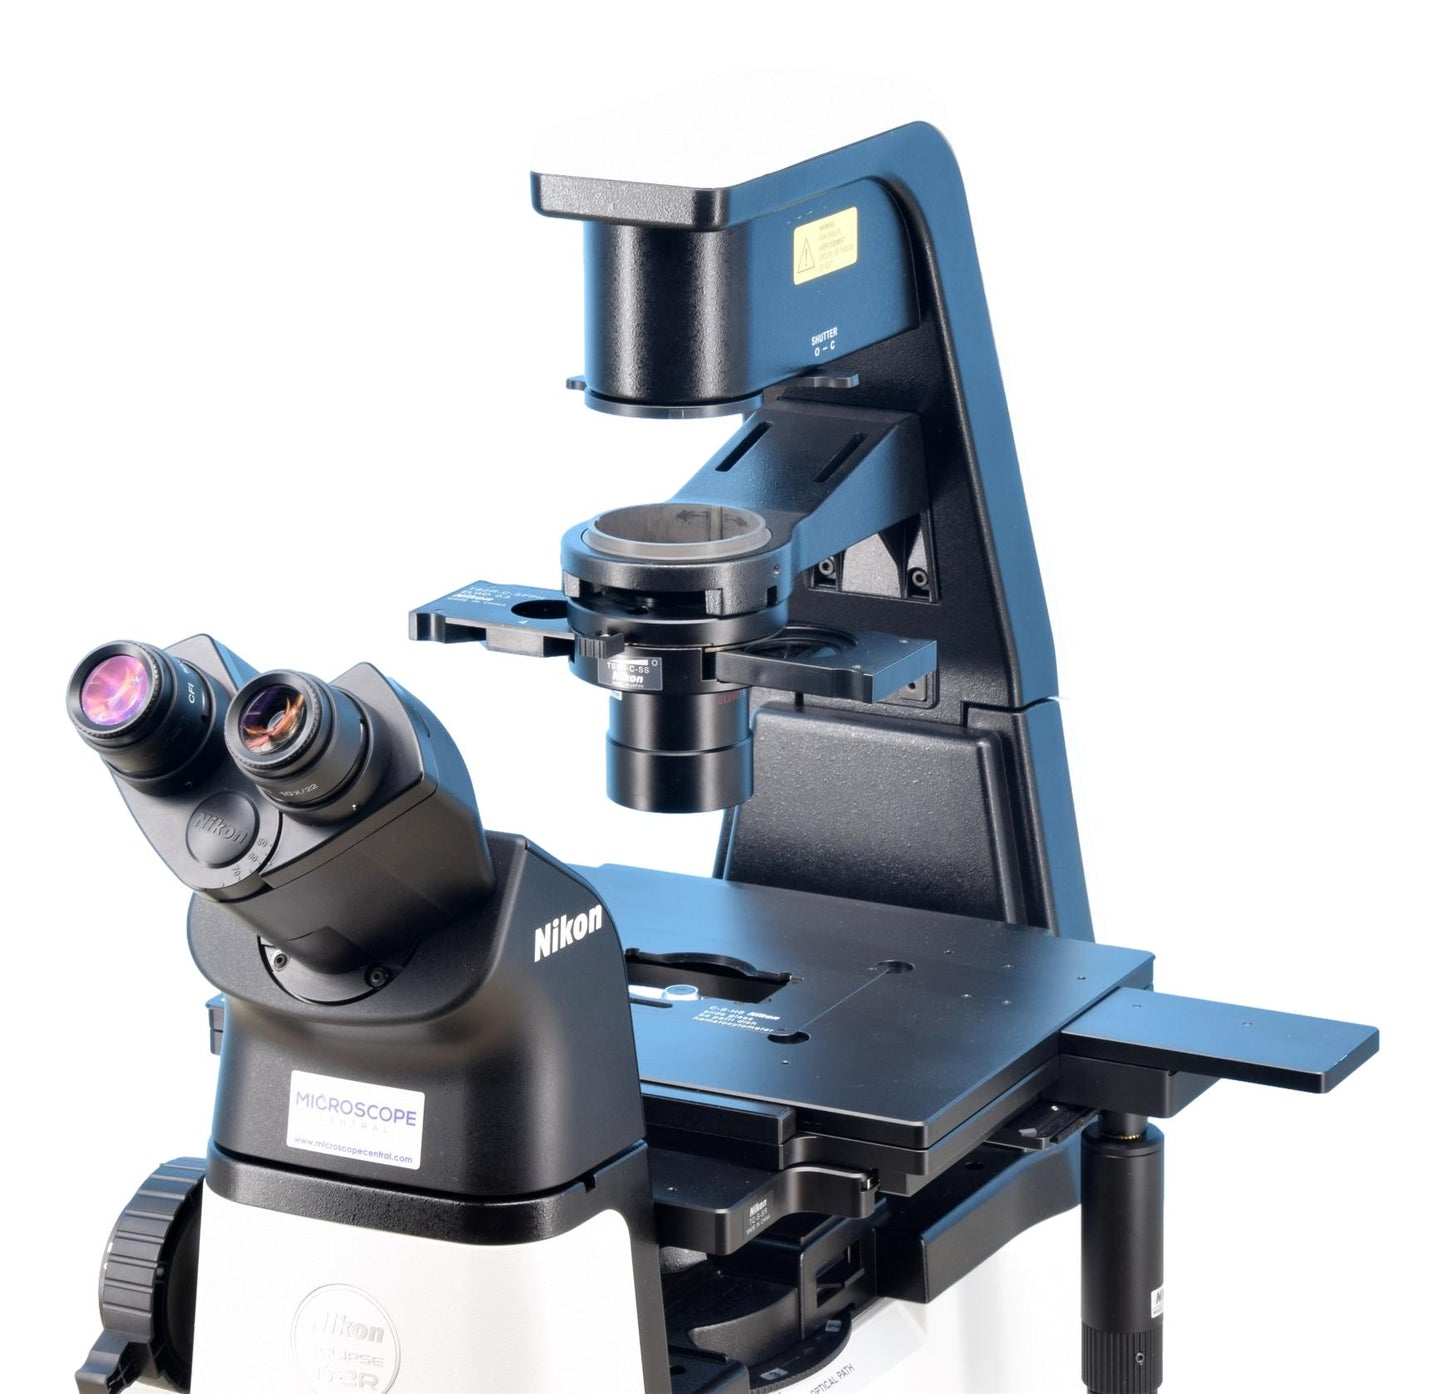 Nikon Ts2R Microscope